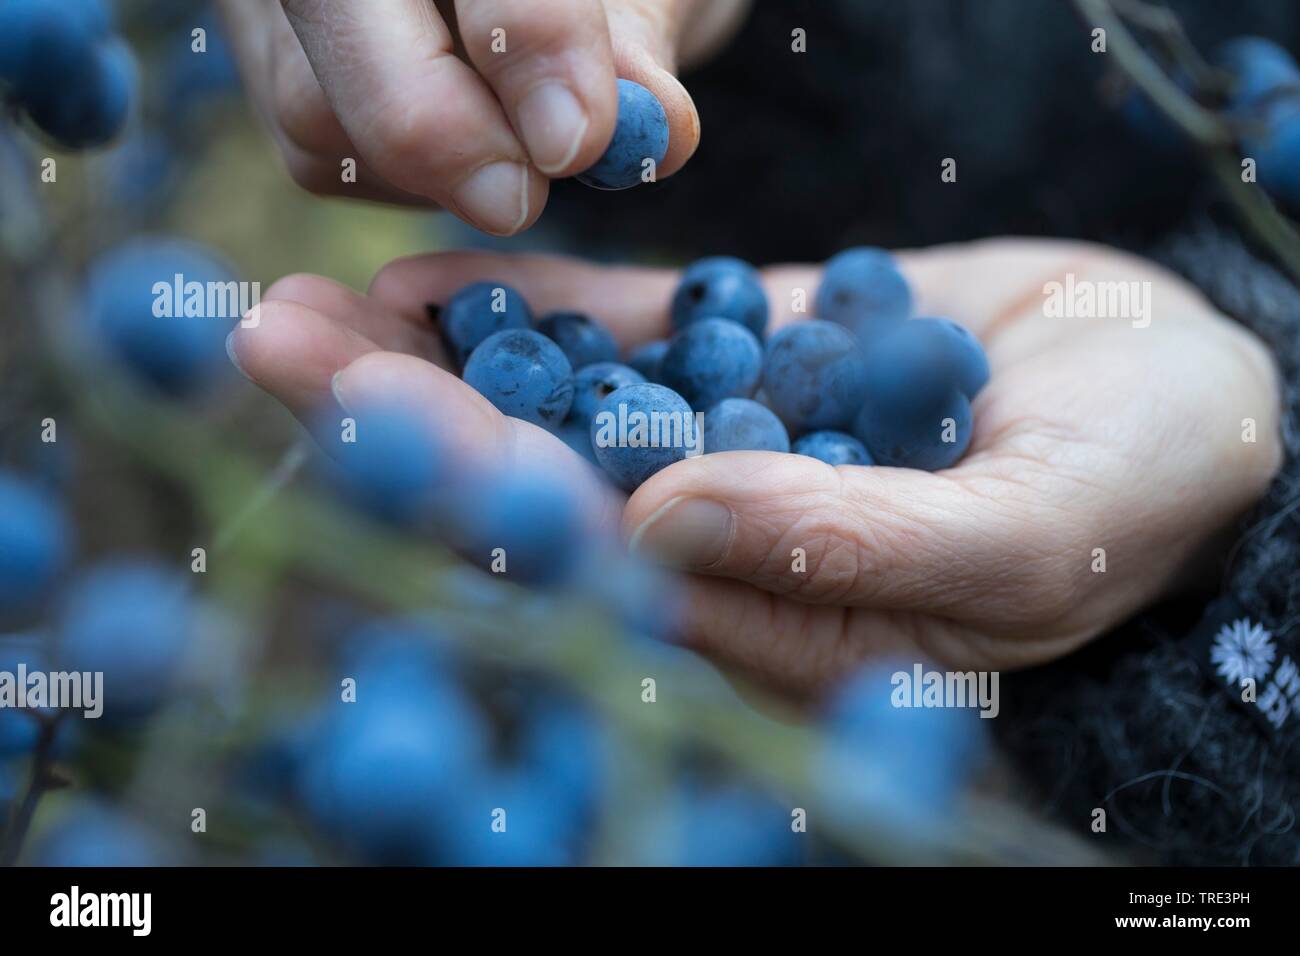 Endrinas, endrino (Prunus spinosa), mujer recolectando frutos de endrino, Alemania Foto de stock